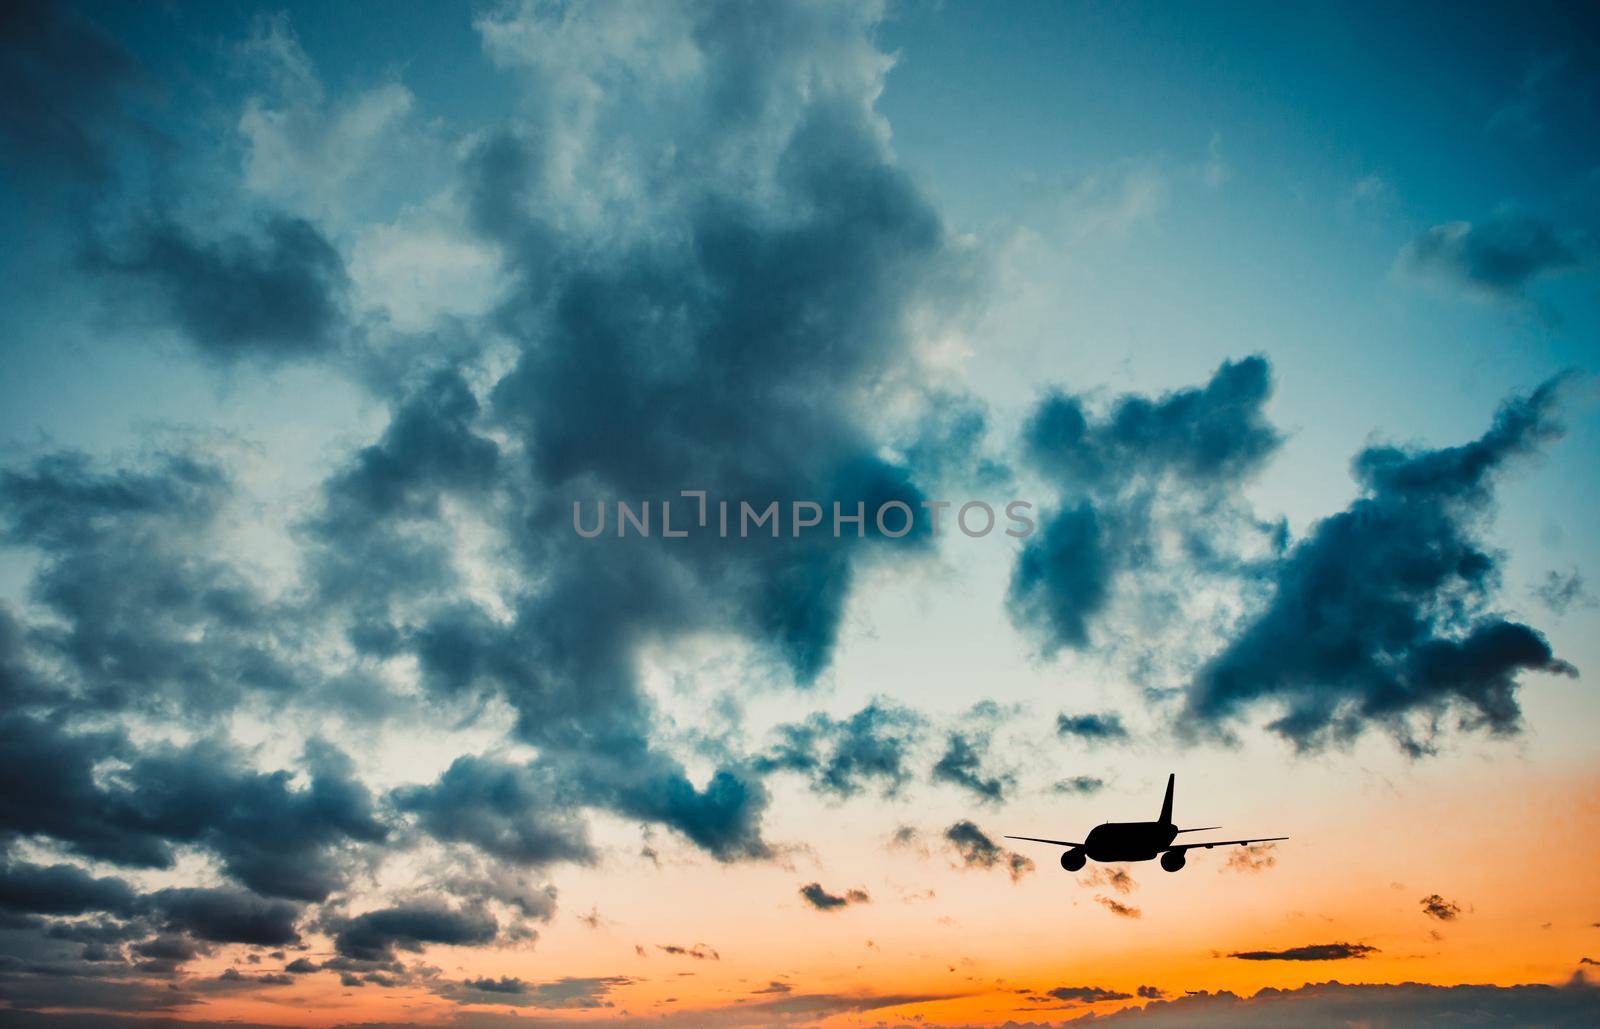 Airplane in the sky by tan4ikk1